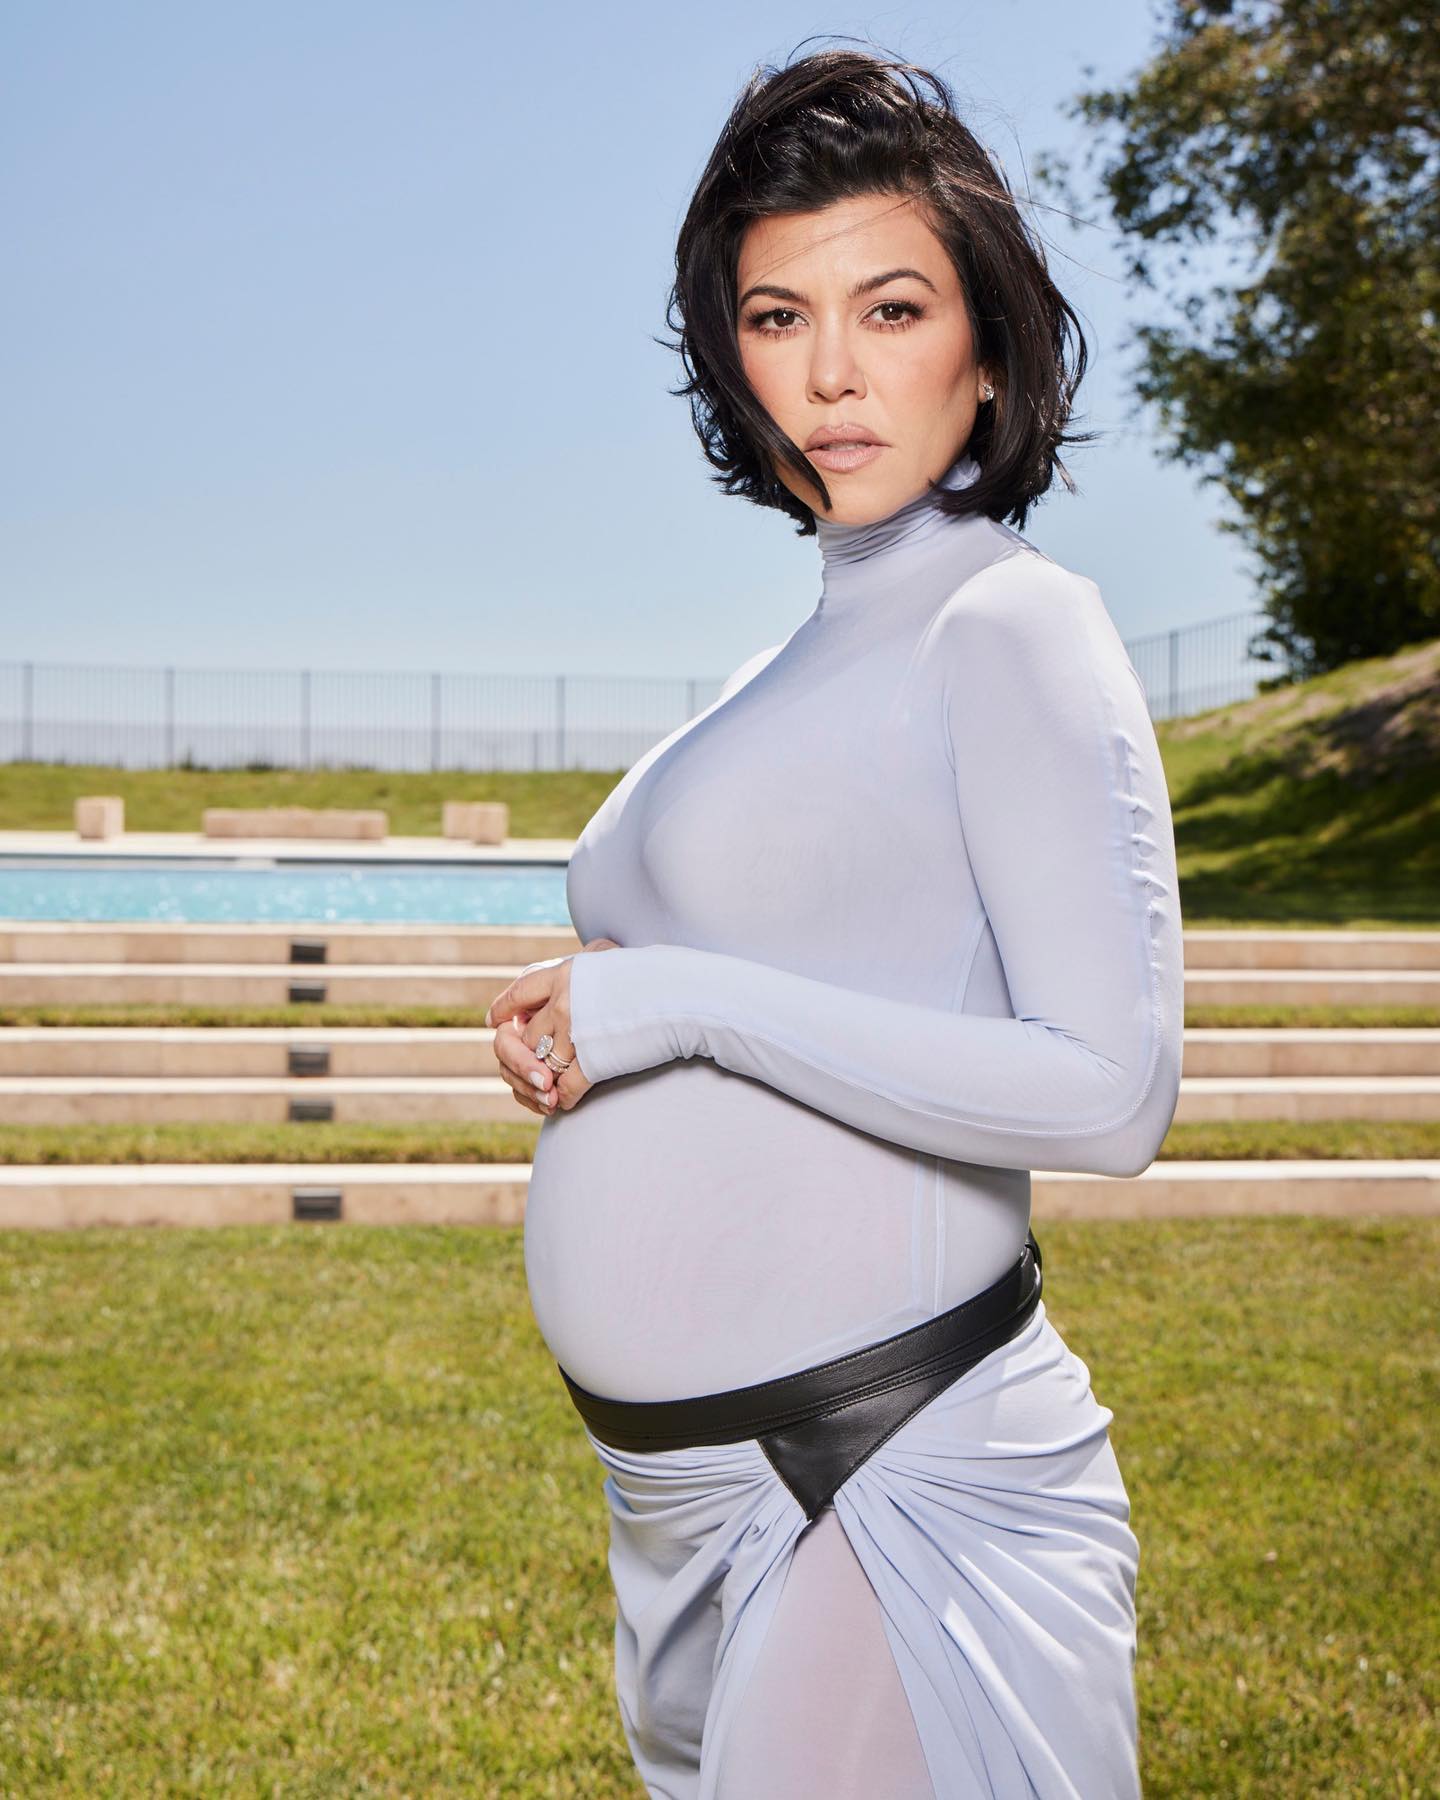 Kourtney pictured last year during her pregnancy